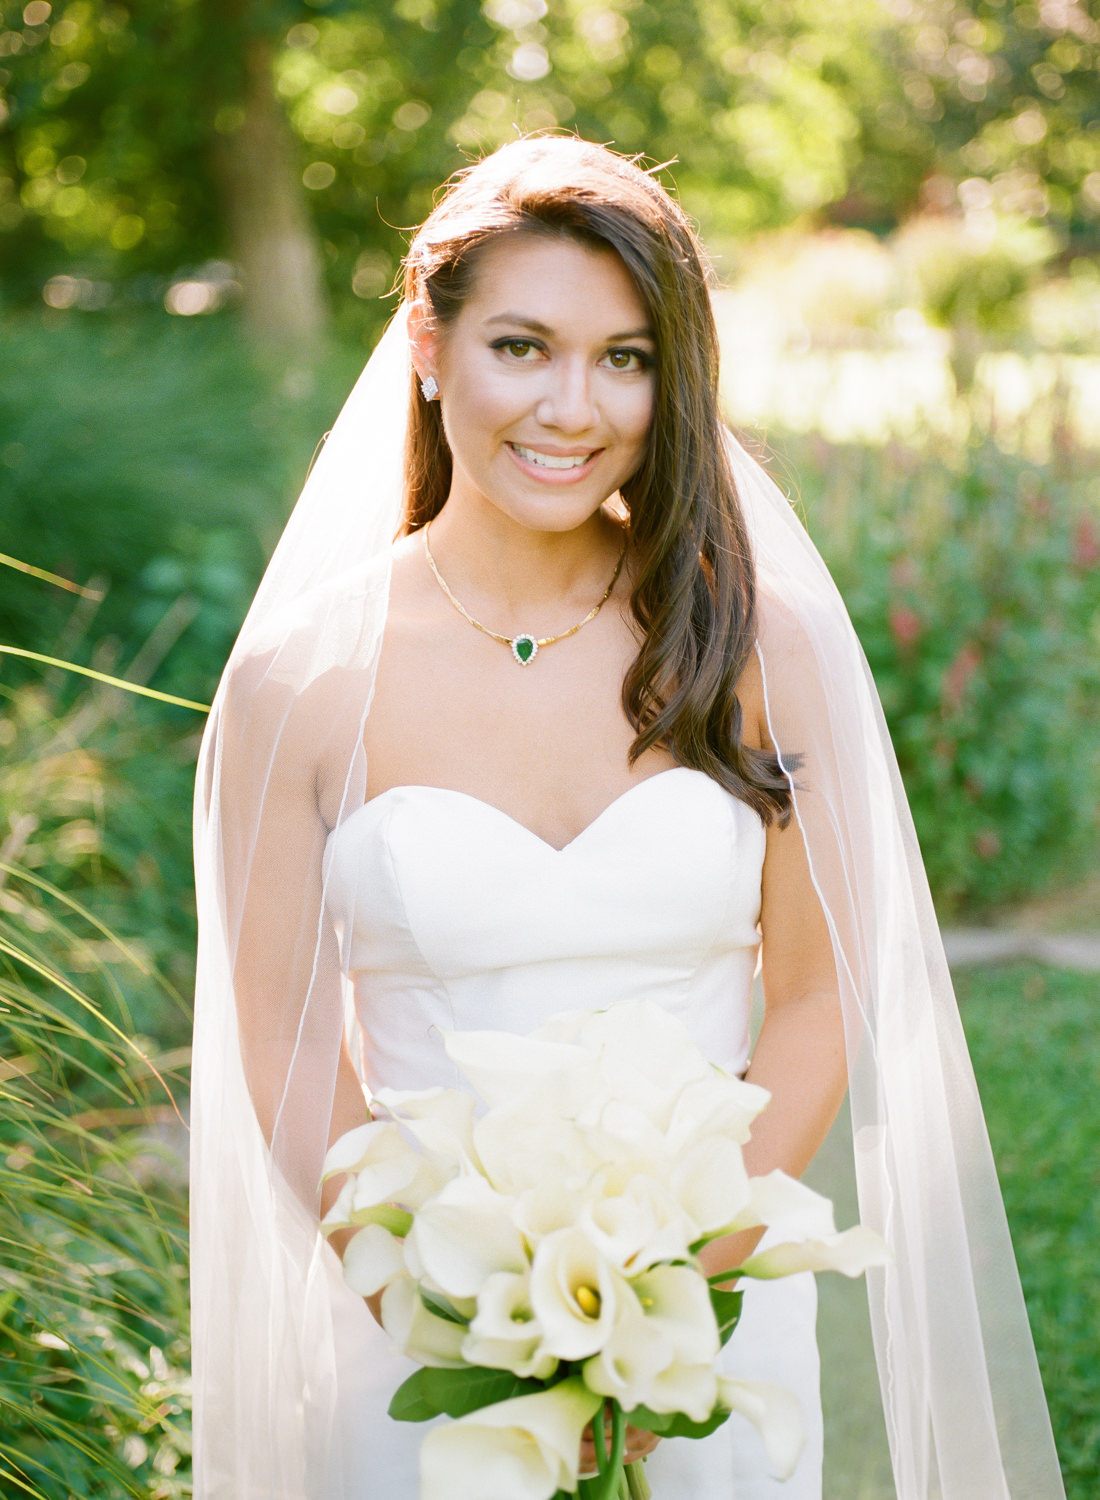 Bridal portrait in sunlight at Lafayette Park; St. Louis fine art film wedding photographer Erica Robnett Photography